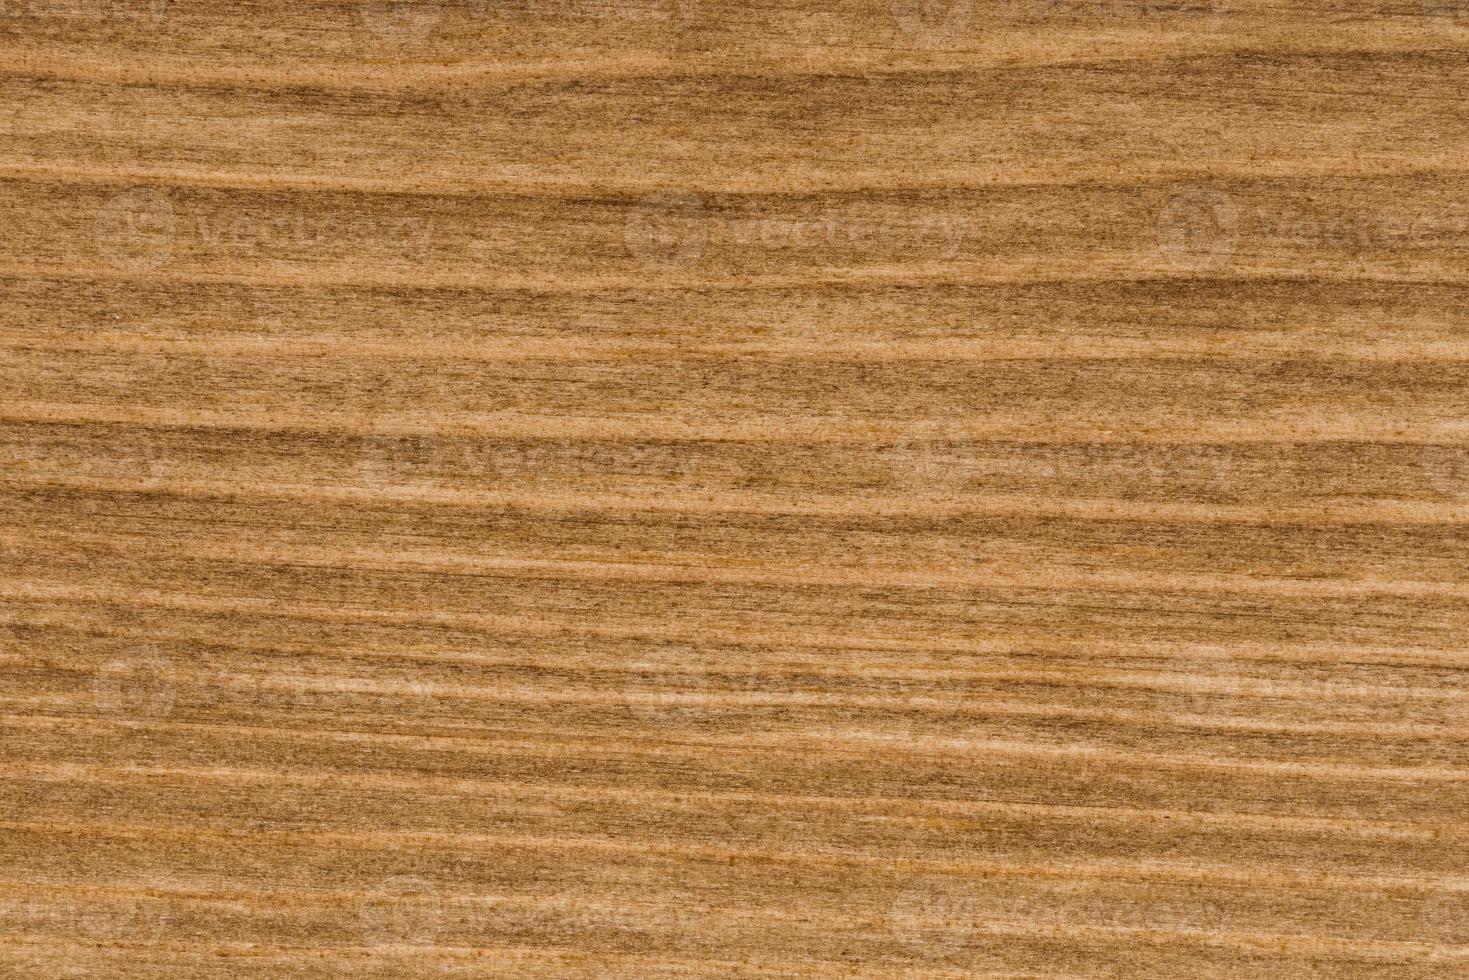 background of pine wood surface photo